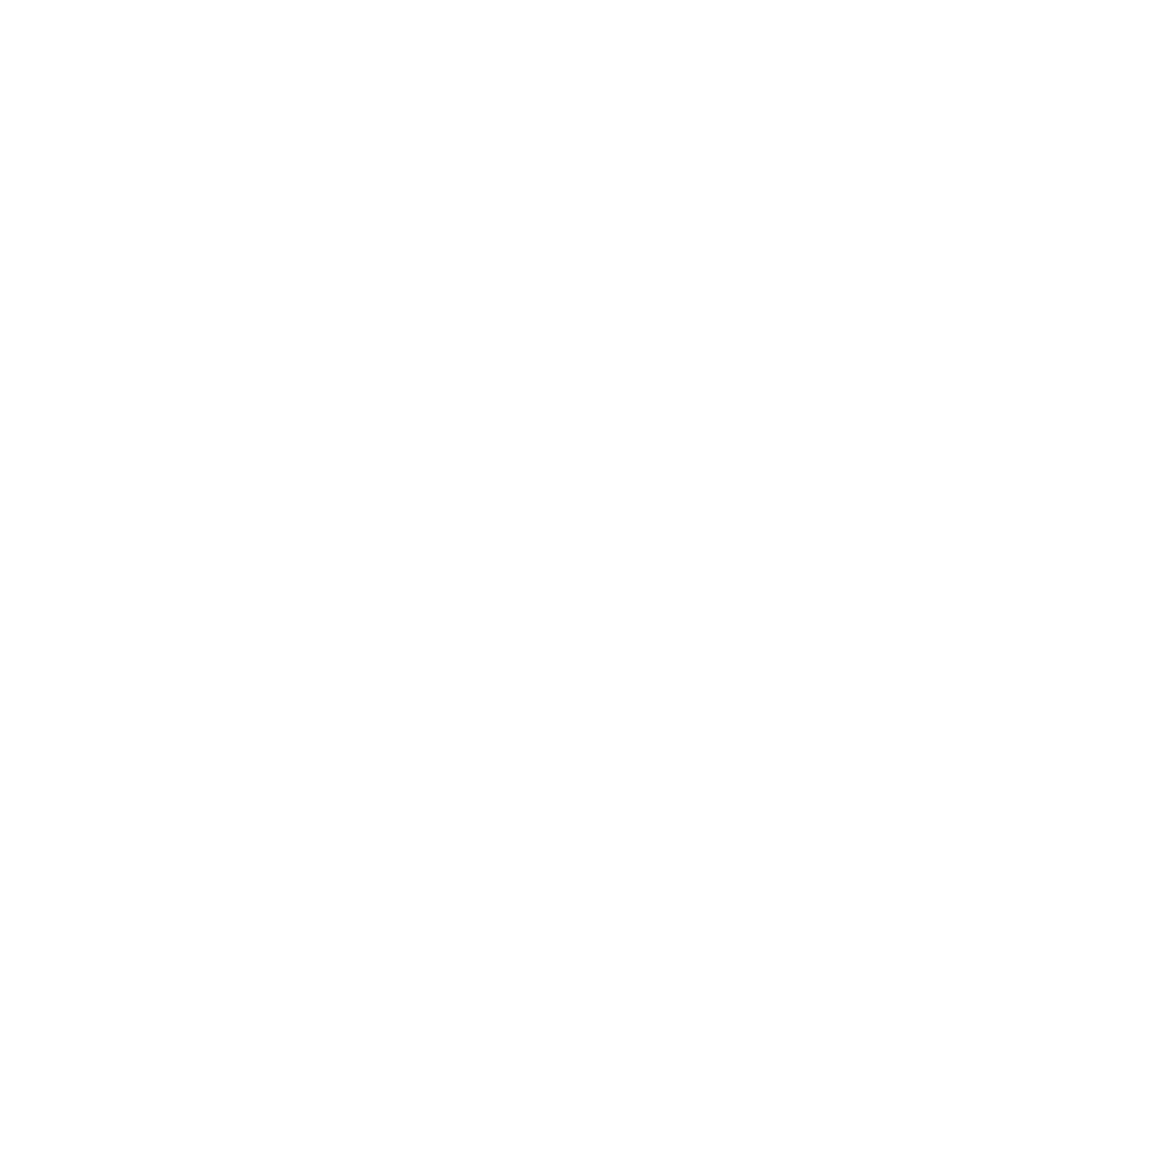 Anat Logo